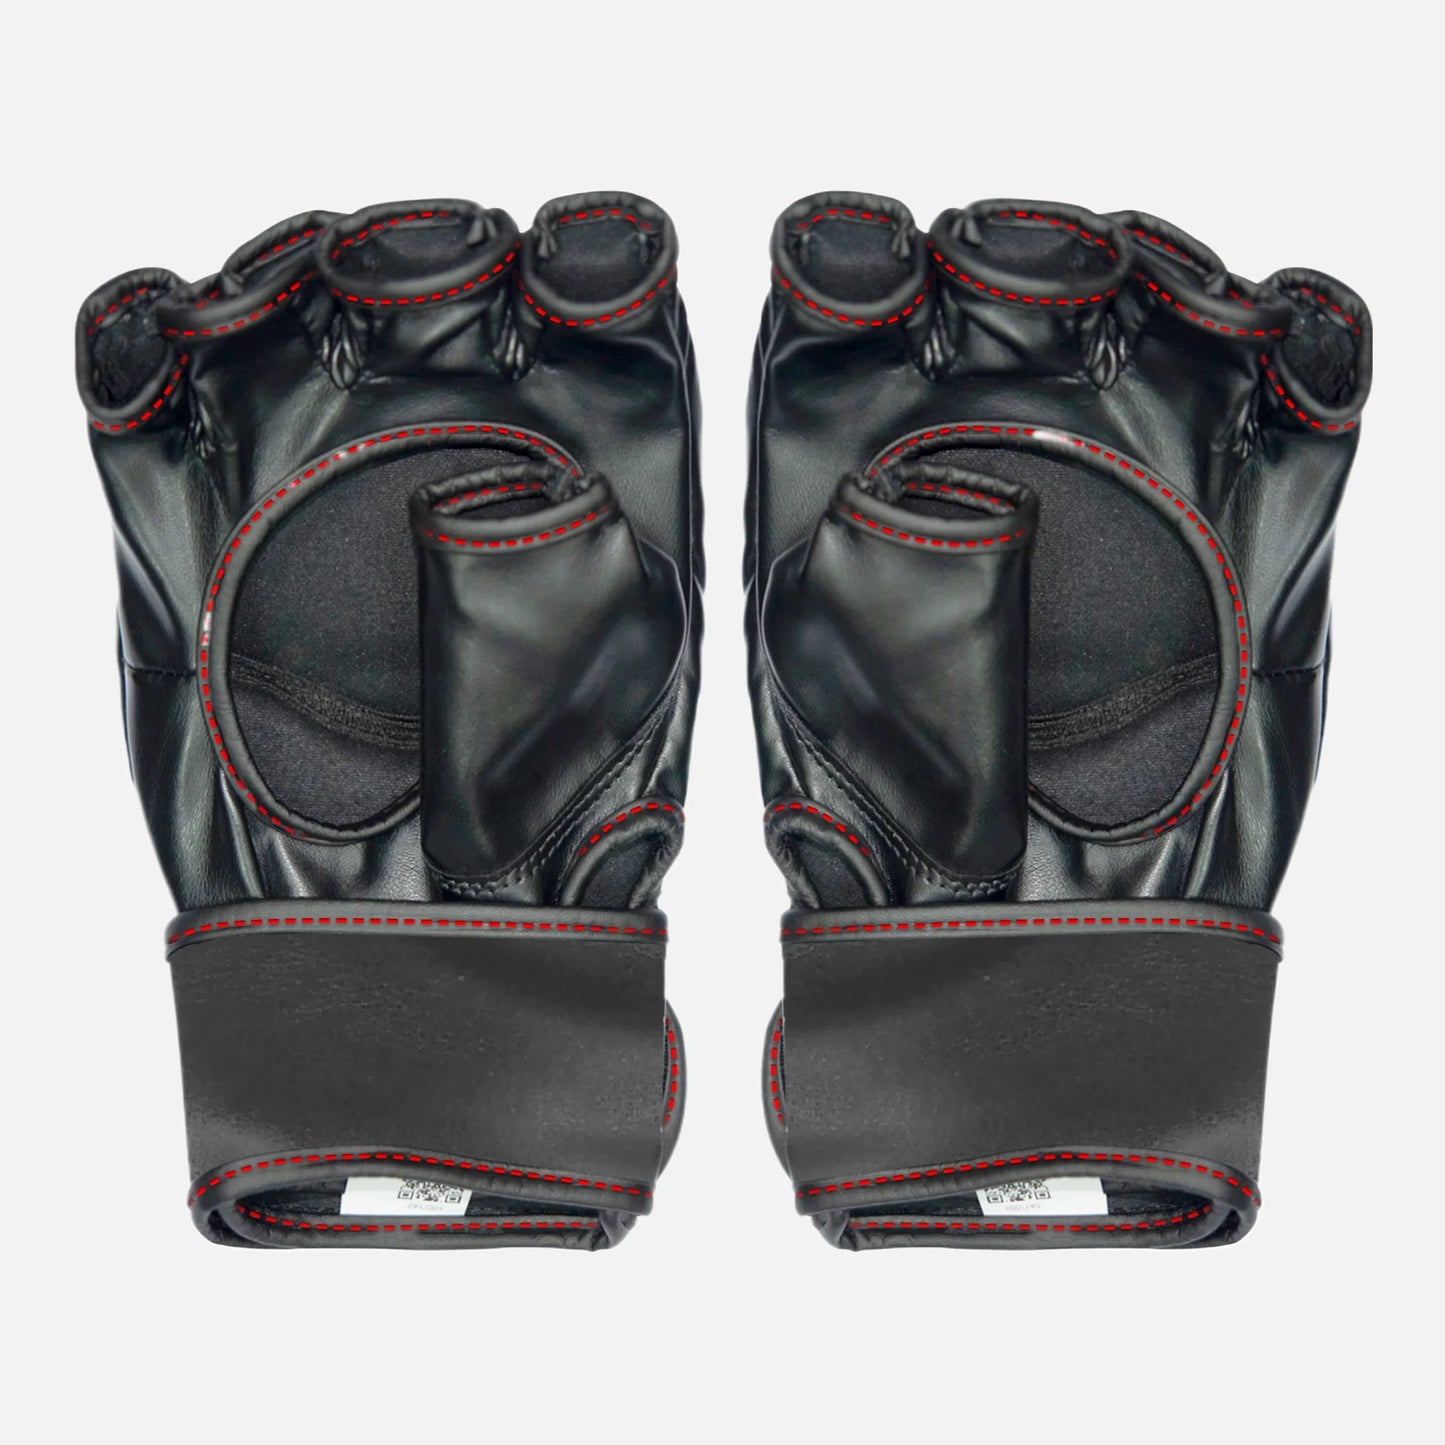 Beginner MMA Grappling Gloves